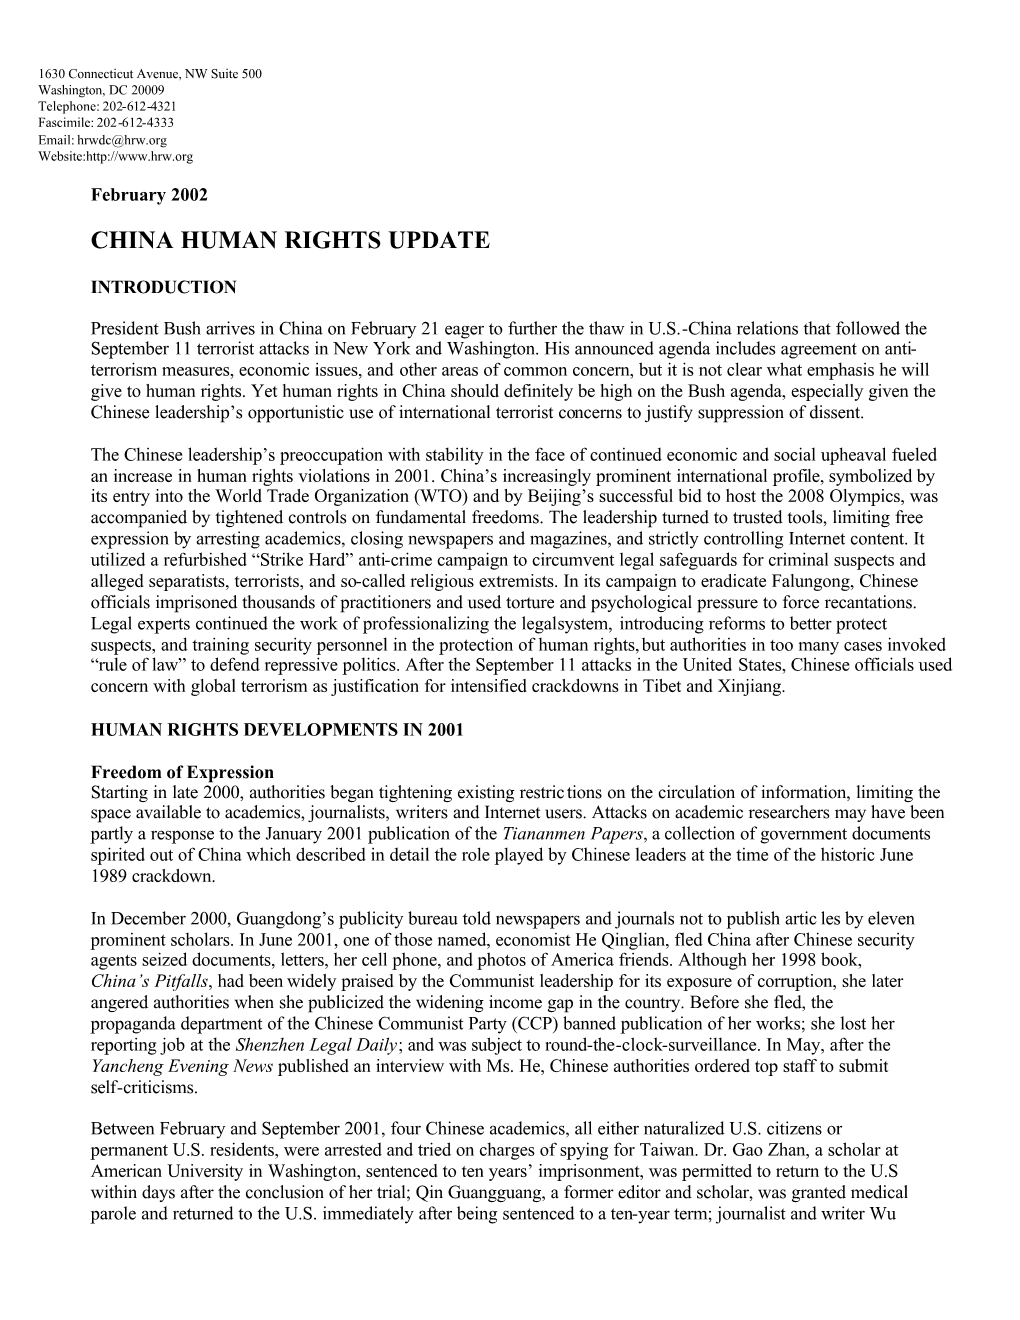 China Human Rights Update